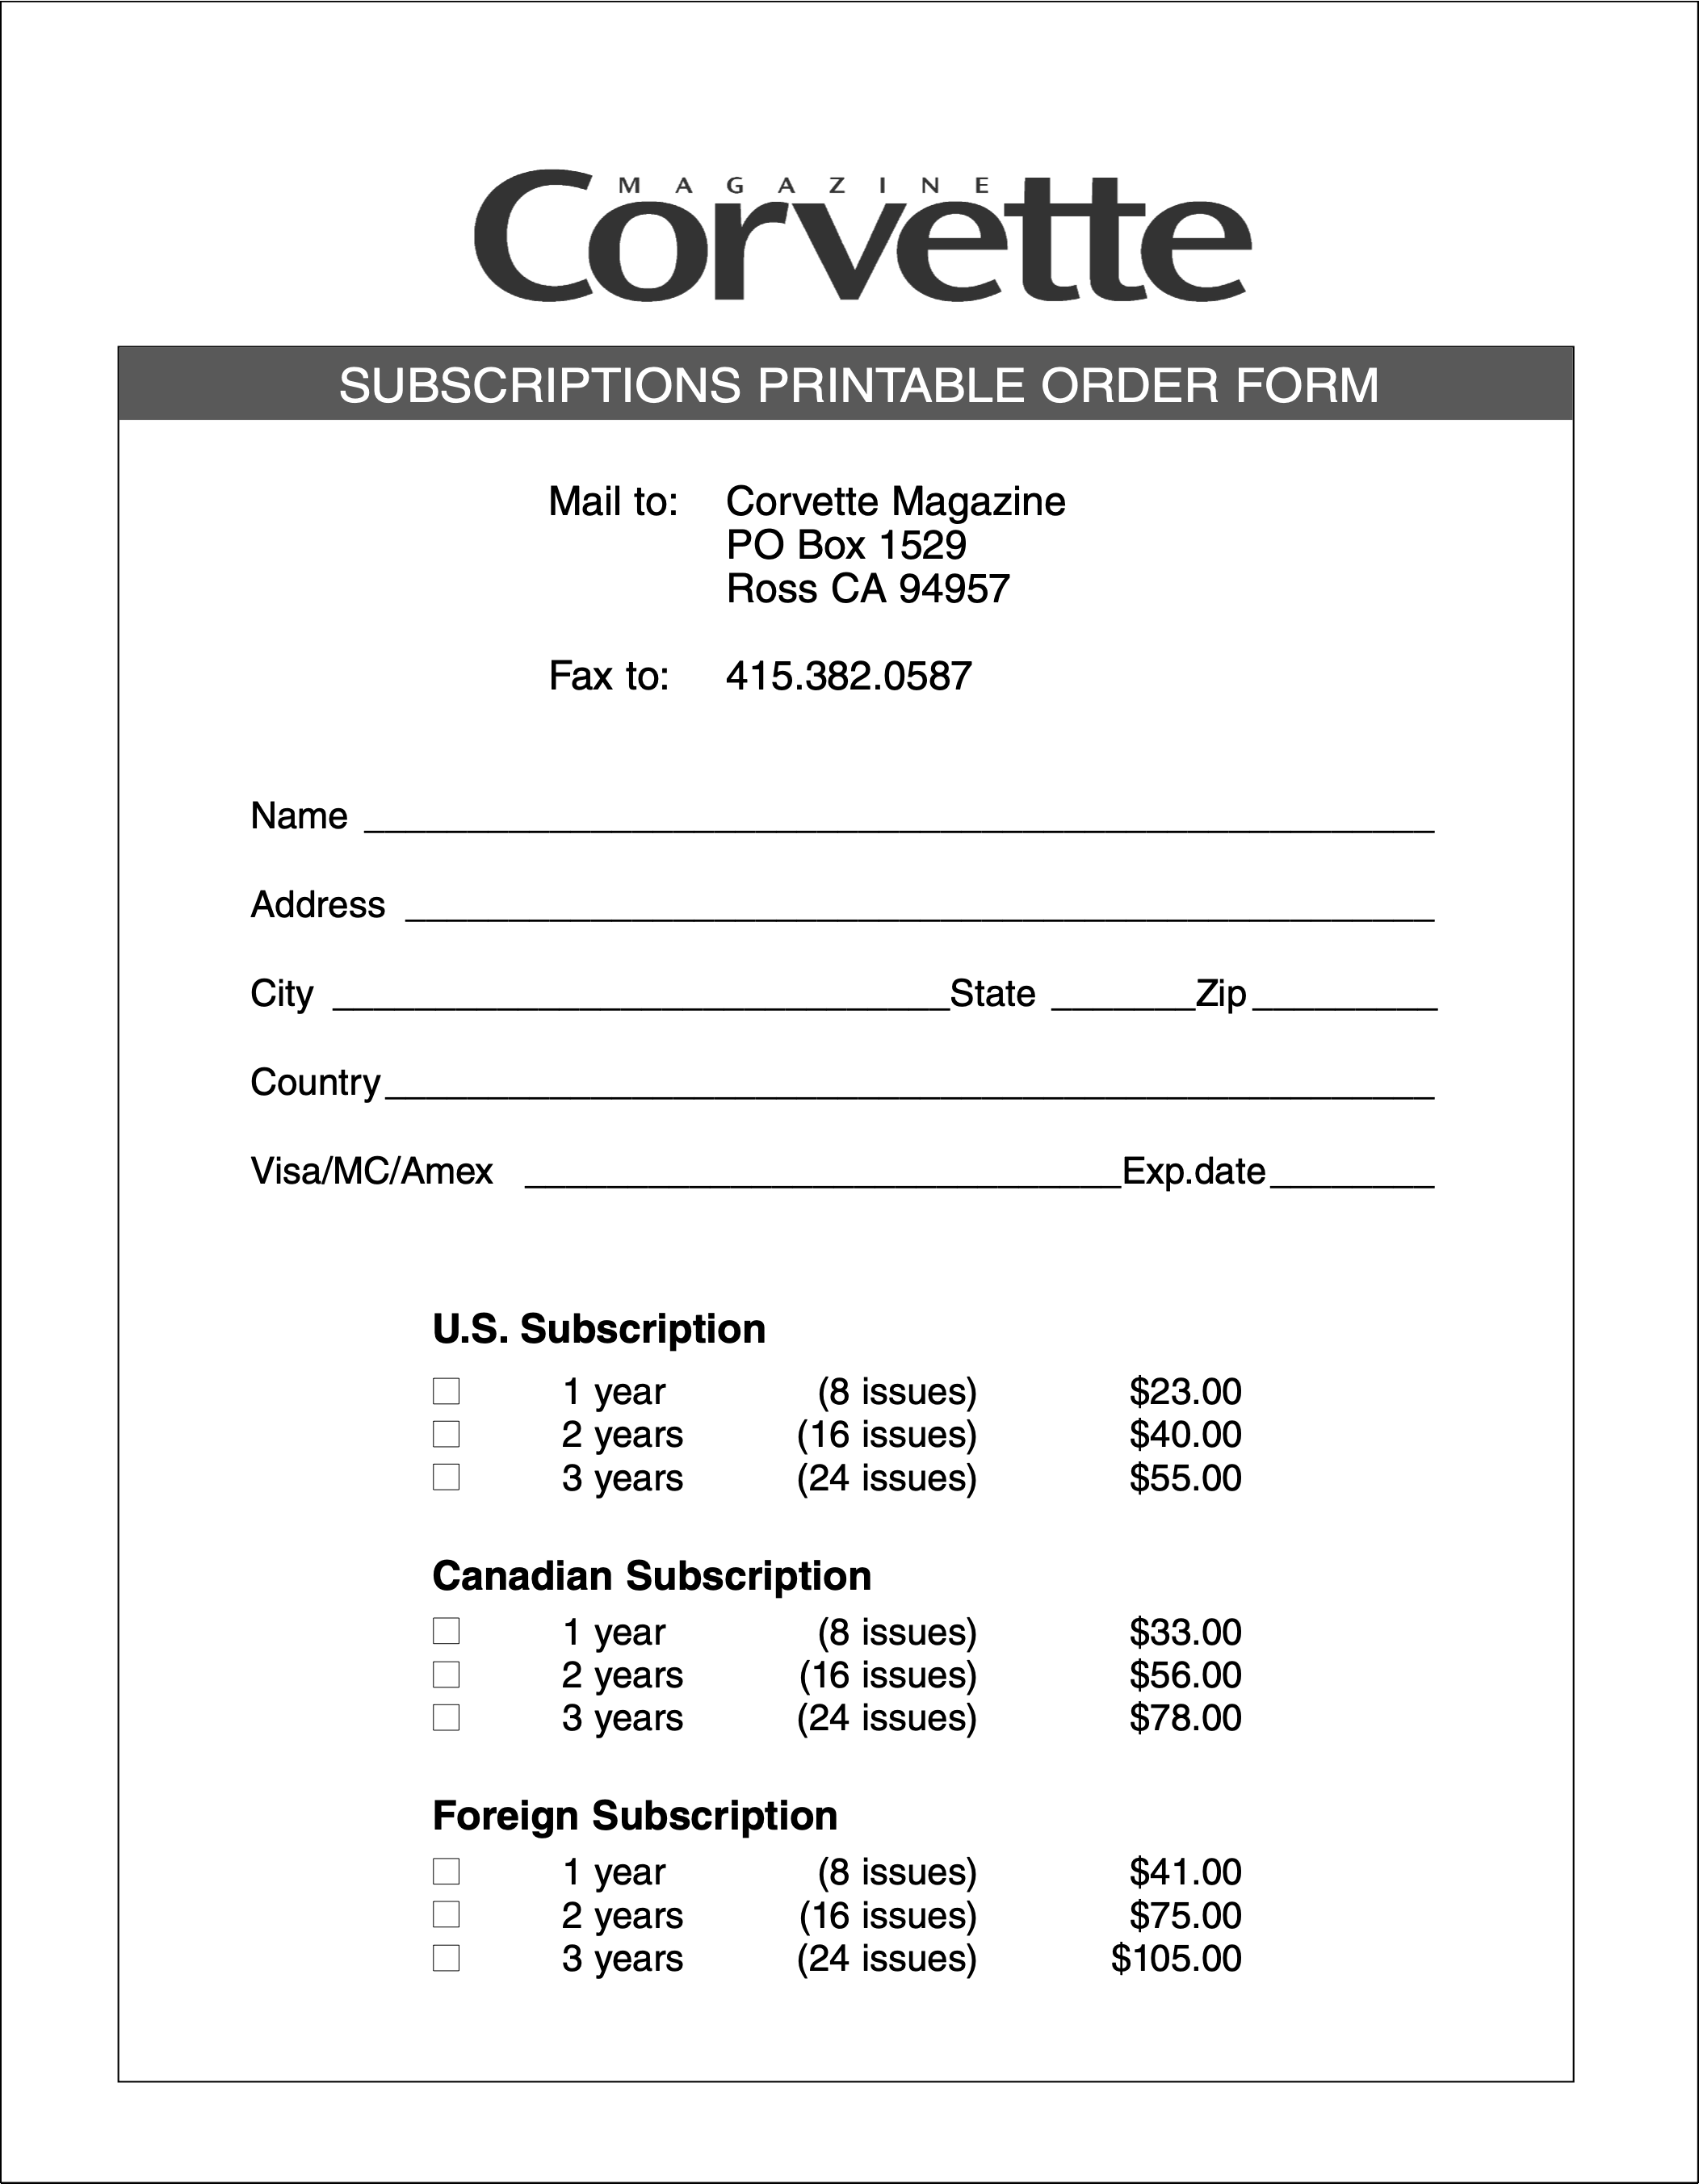 Corvette Magazine Subscription Order Form